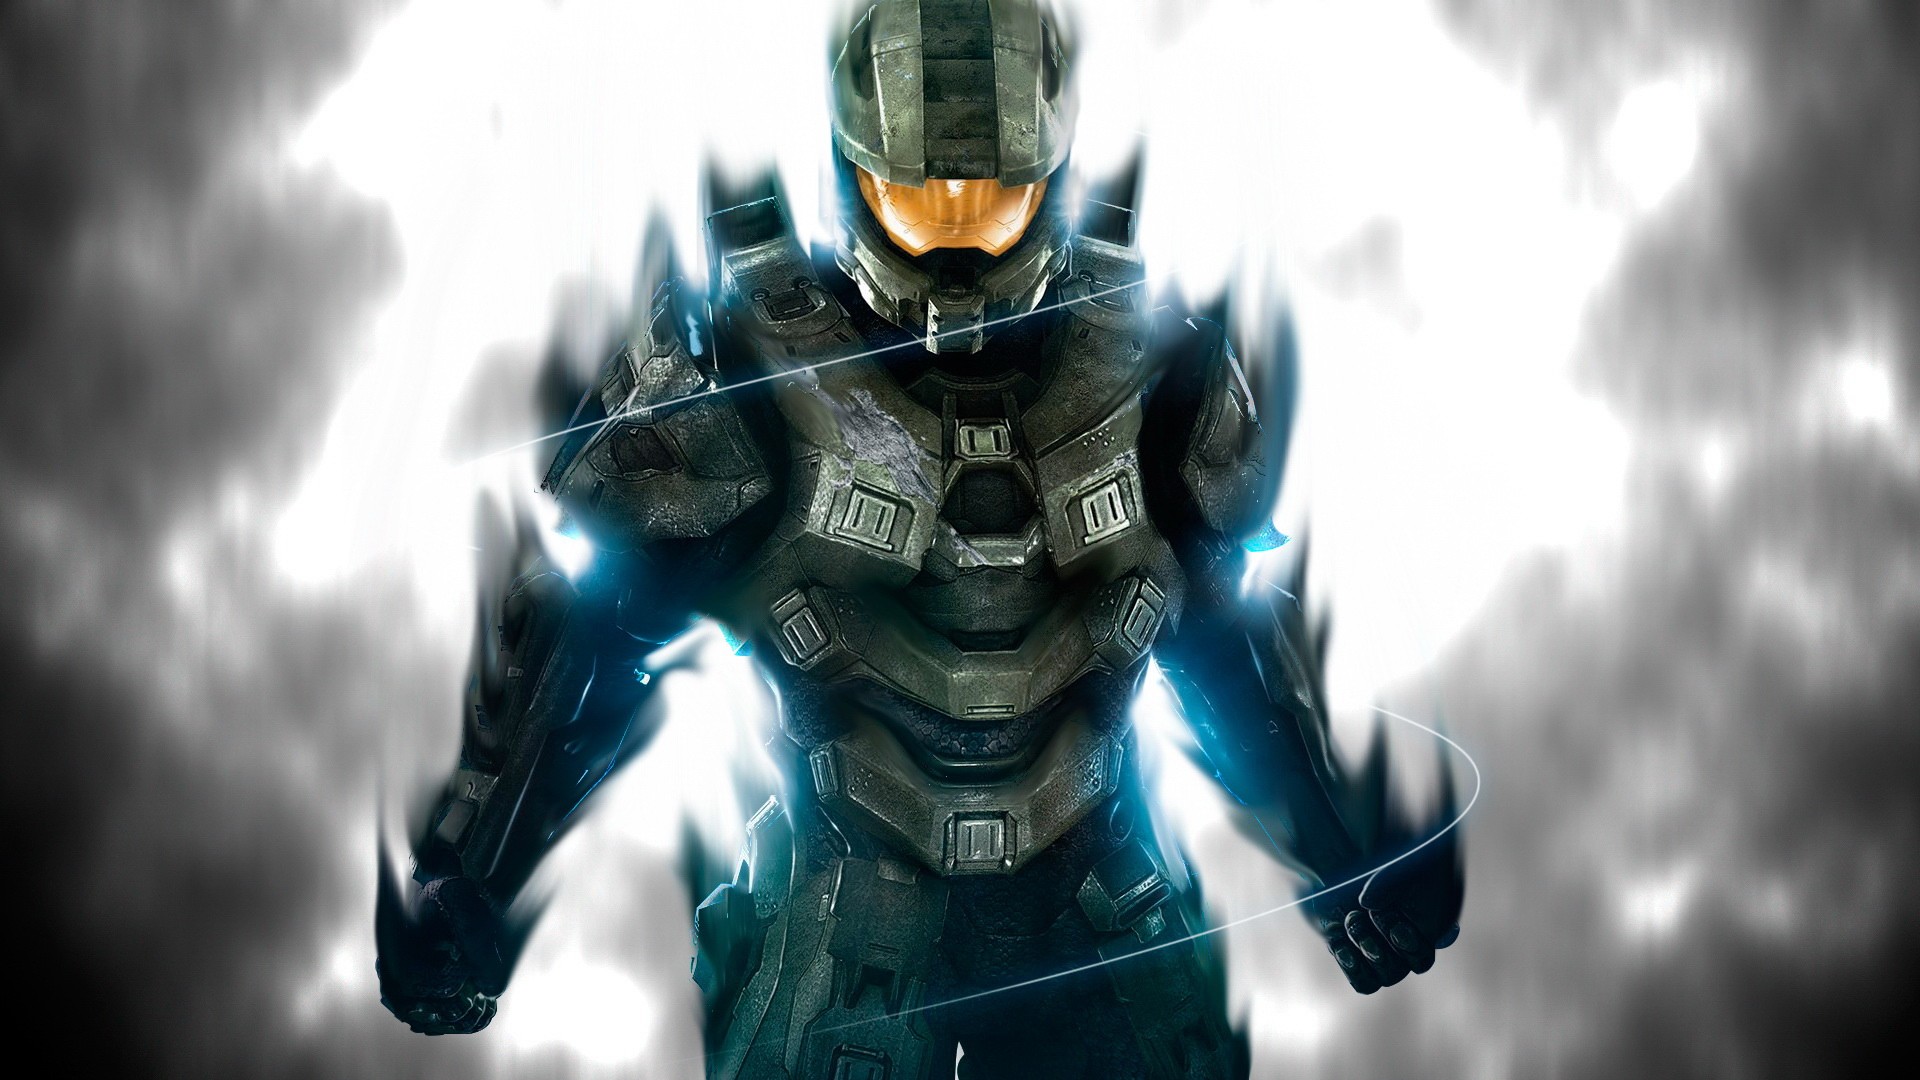 ... Master Chief - Halo 5 Guardians Wallpaper HD ...